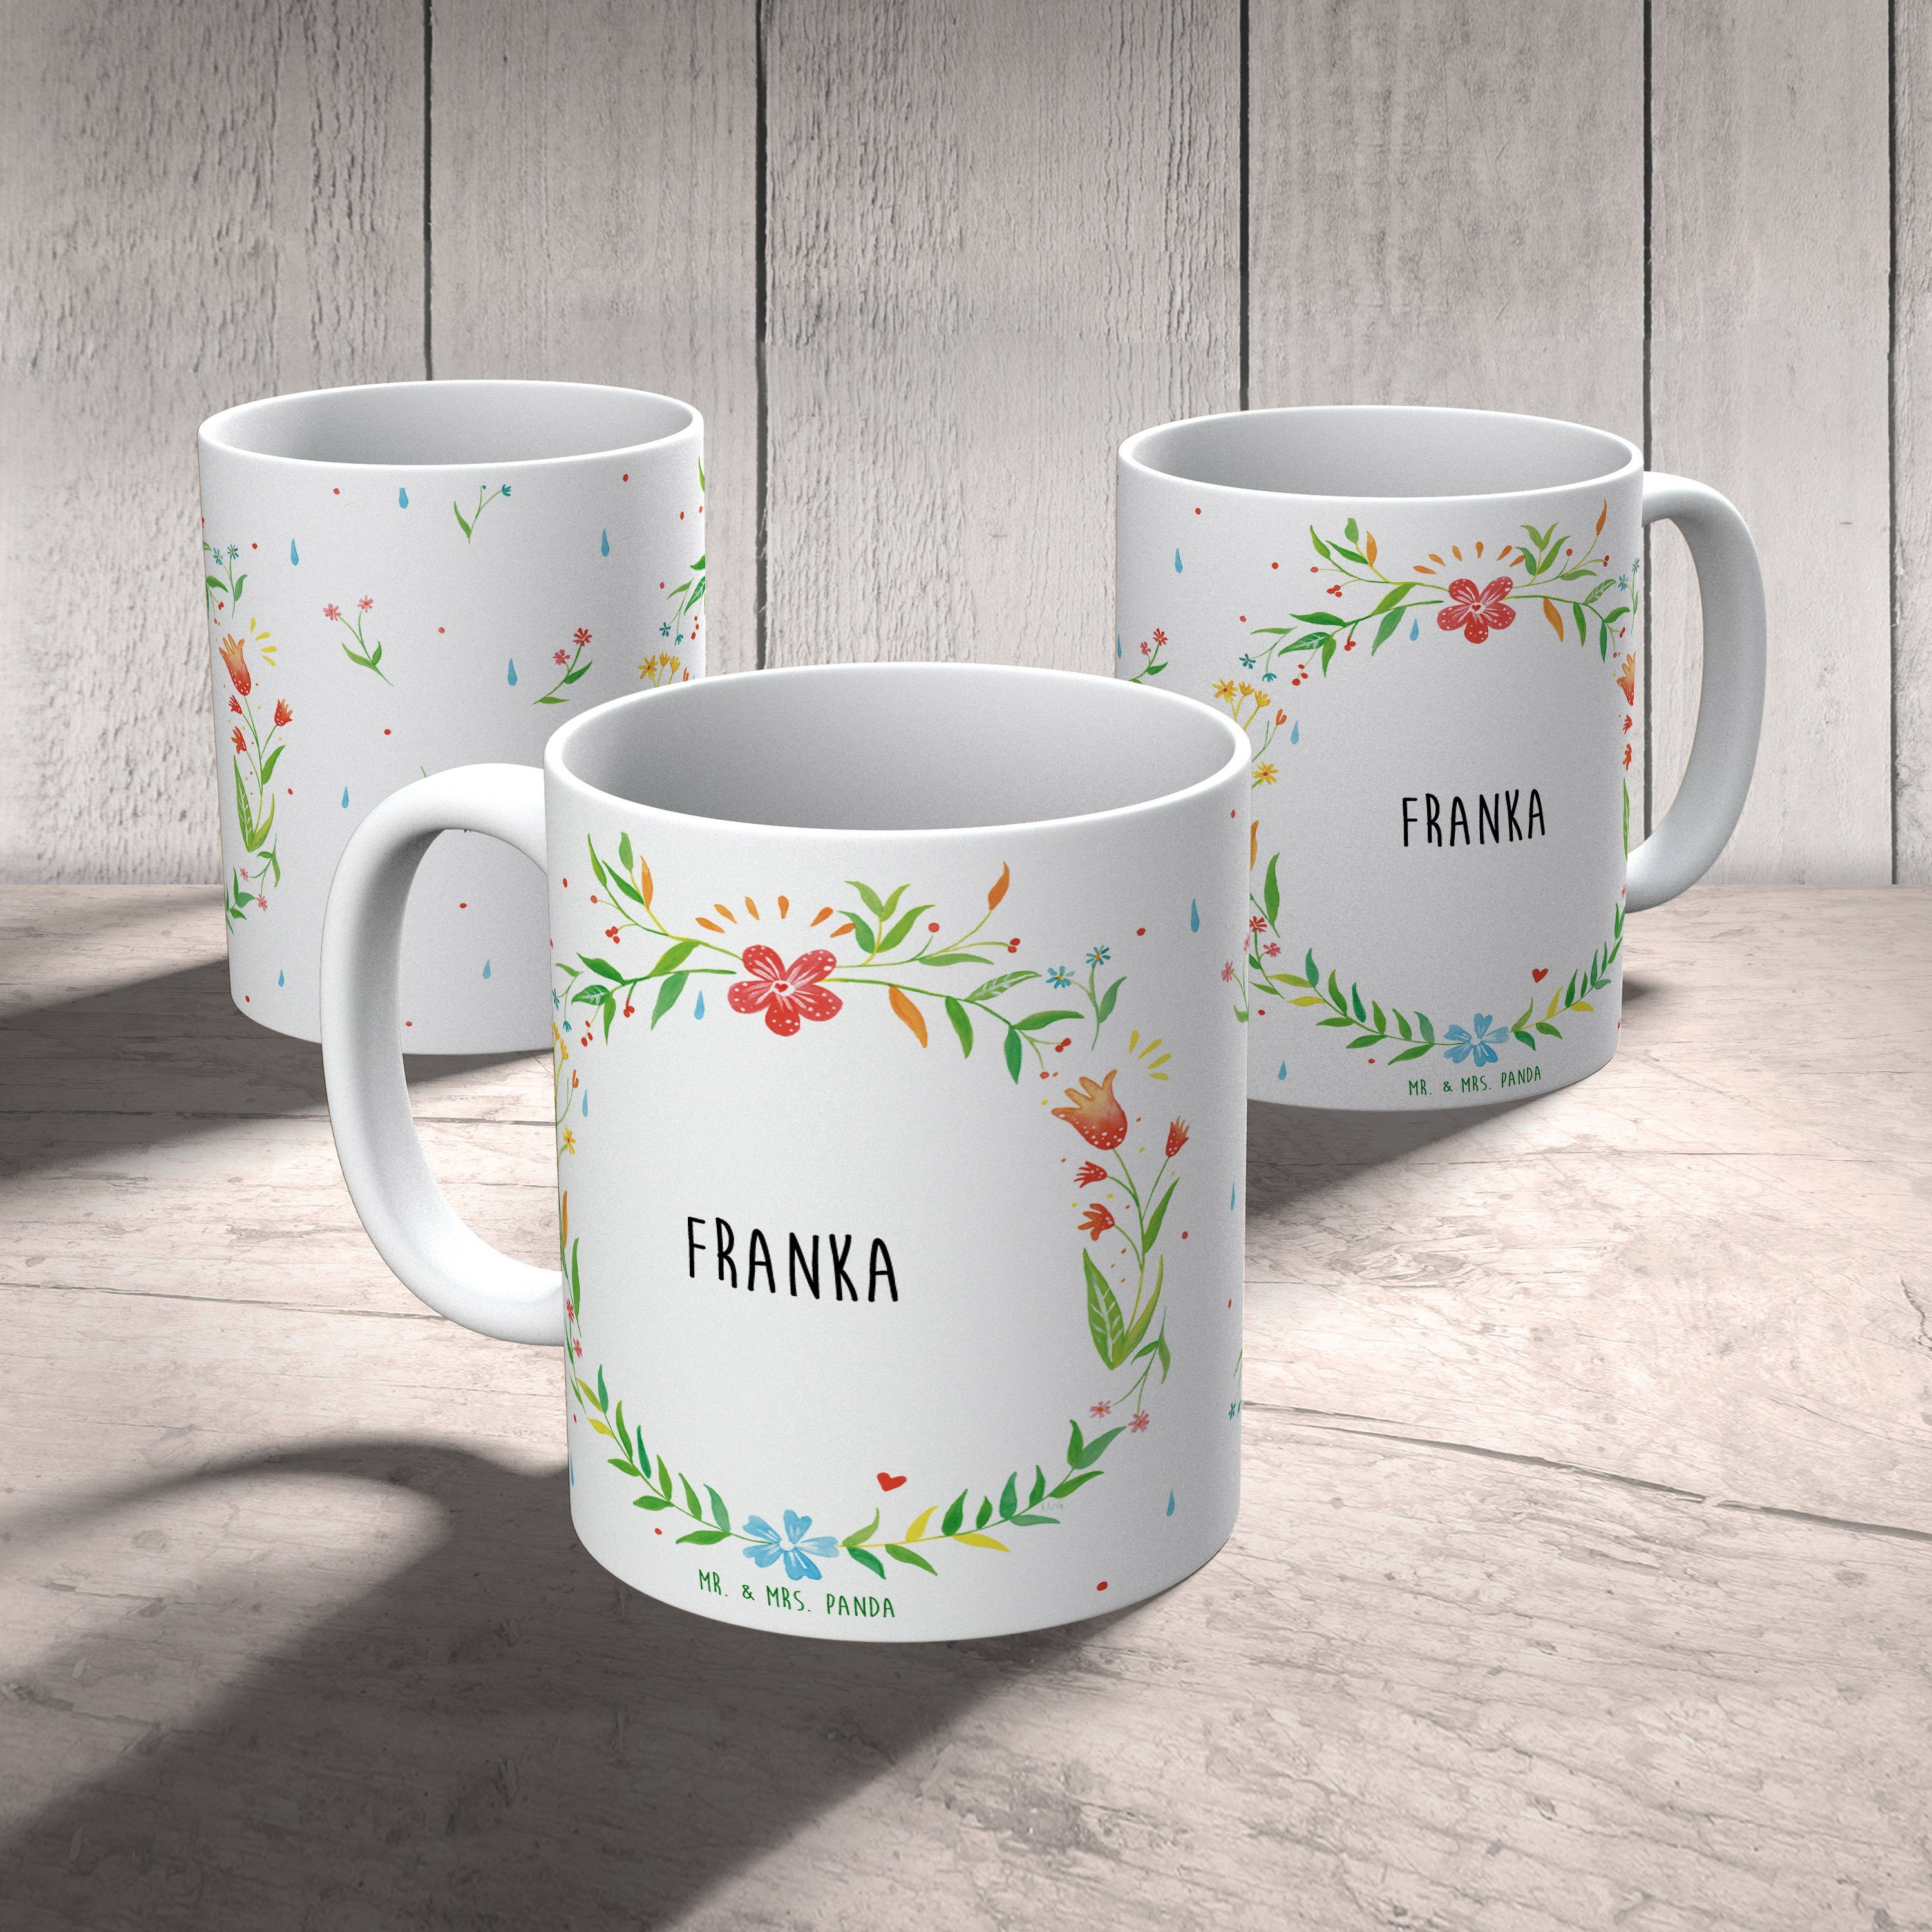 Tasse & - Sprüche, Motive, Tasse Geschenk, Panda Mr. Franka Keramik Kaffe, Tasse Porzellantasse, Mrs.